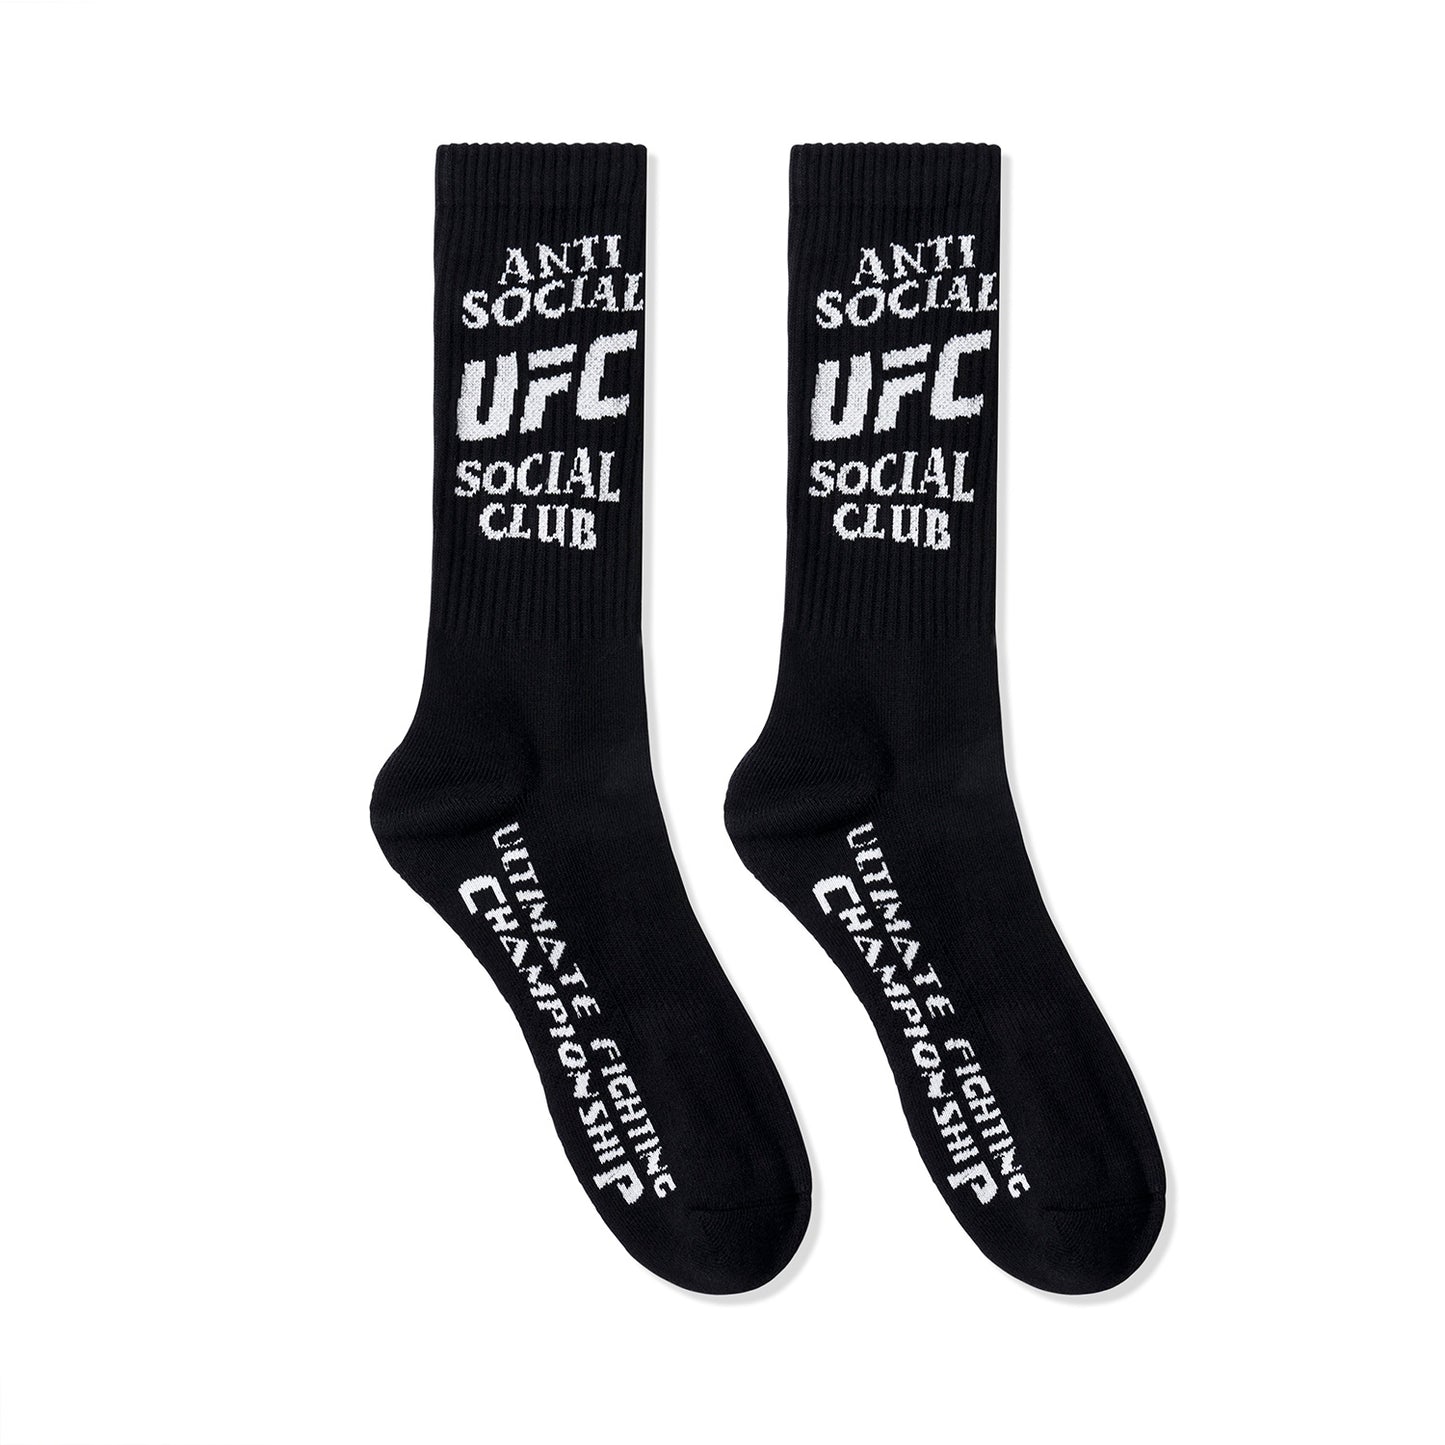 Anti Social Social Club x UFC Dyaco Boxing Gloves Black - SS23 - US